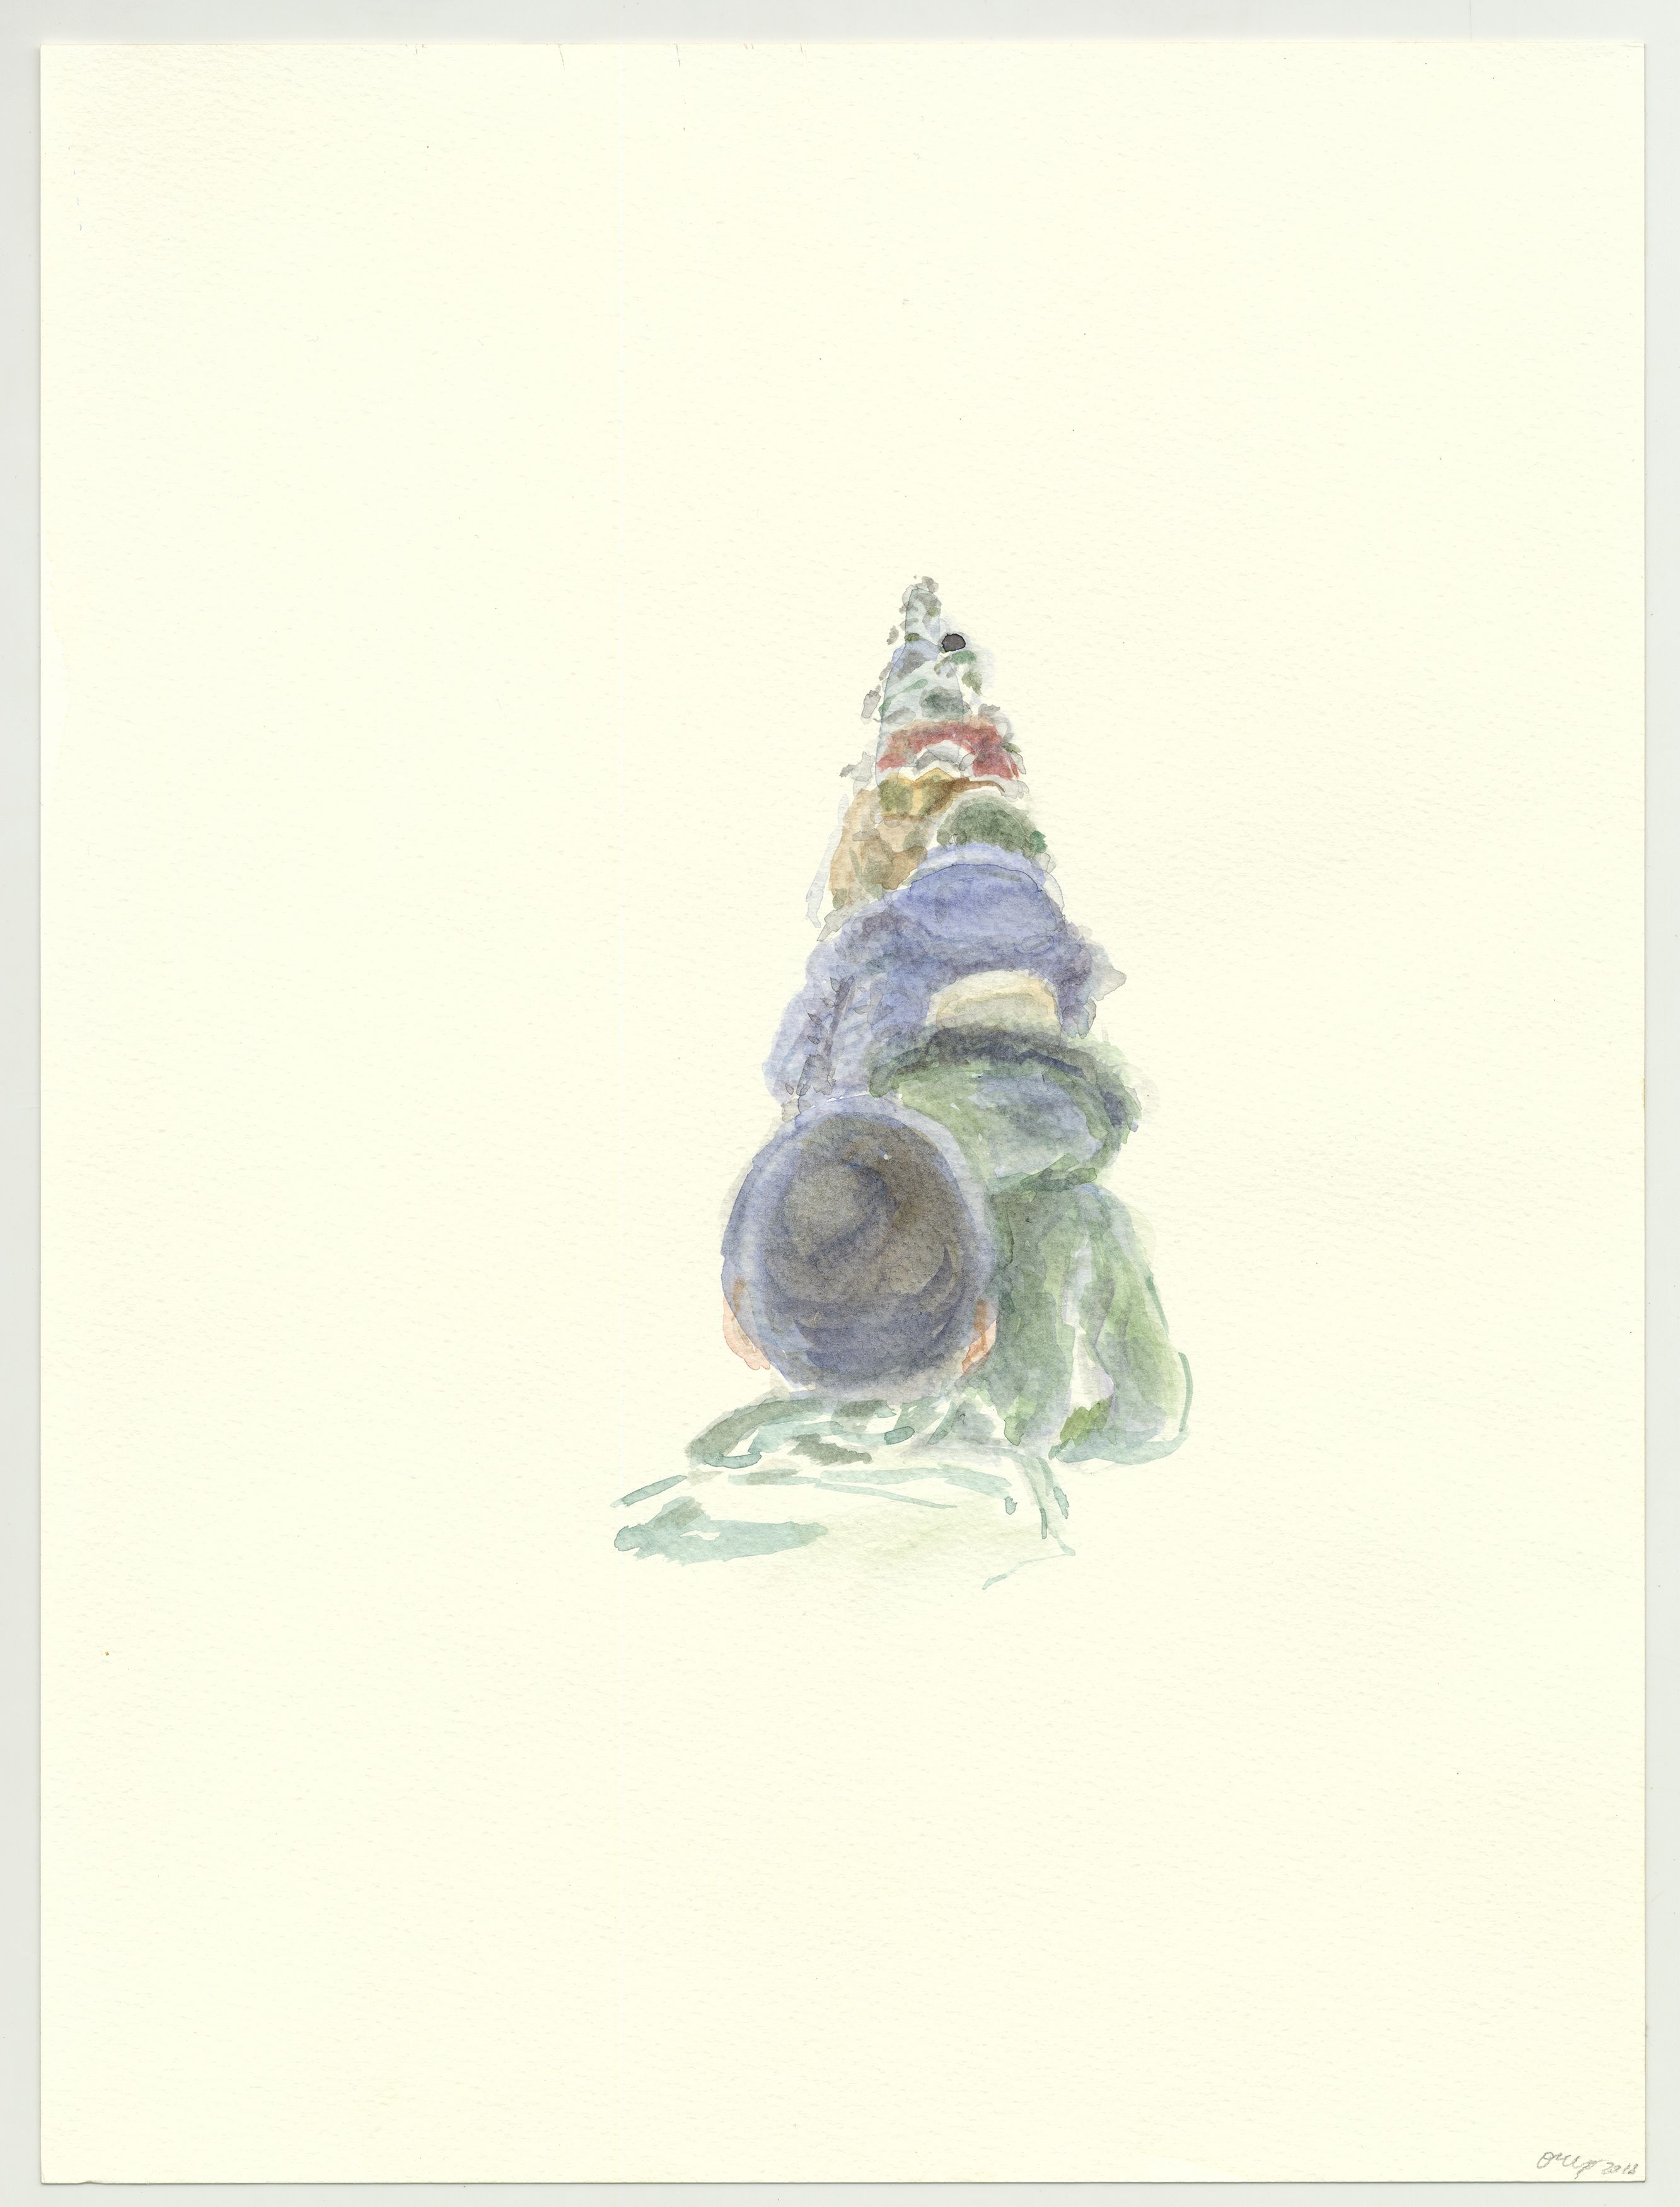 Olga Chernysheva, Escalation, 2018, watercolor on paper, 18 7⁄8 x 14 1⁄8 in. (48 x 36 cm.)